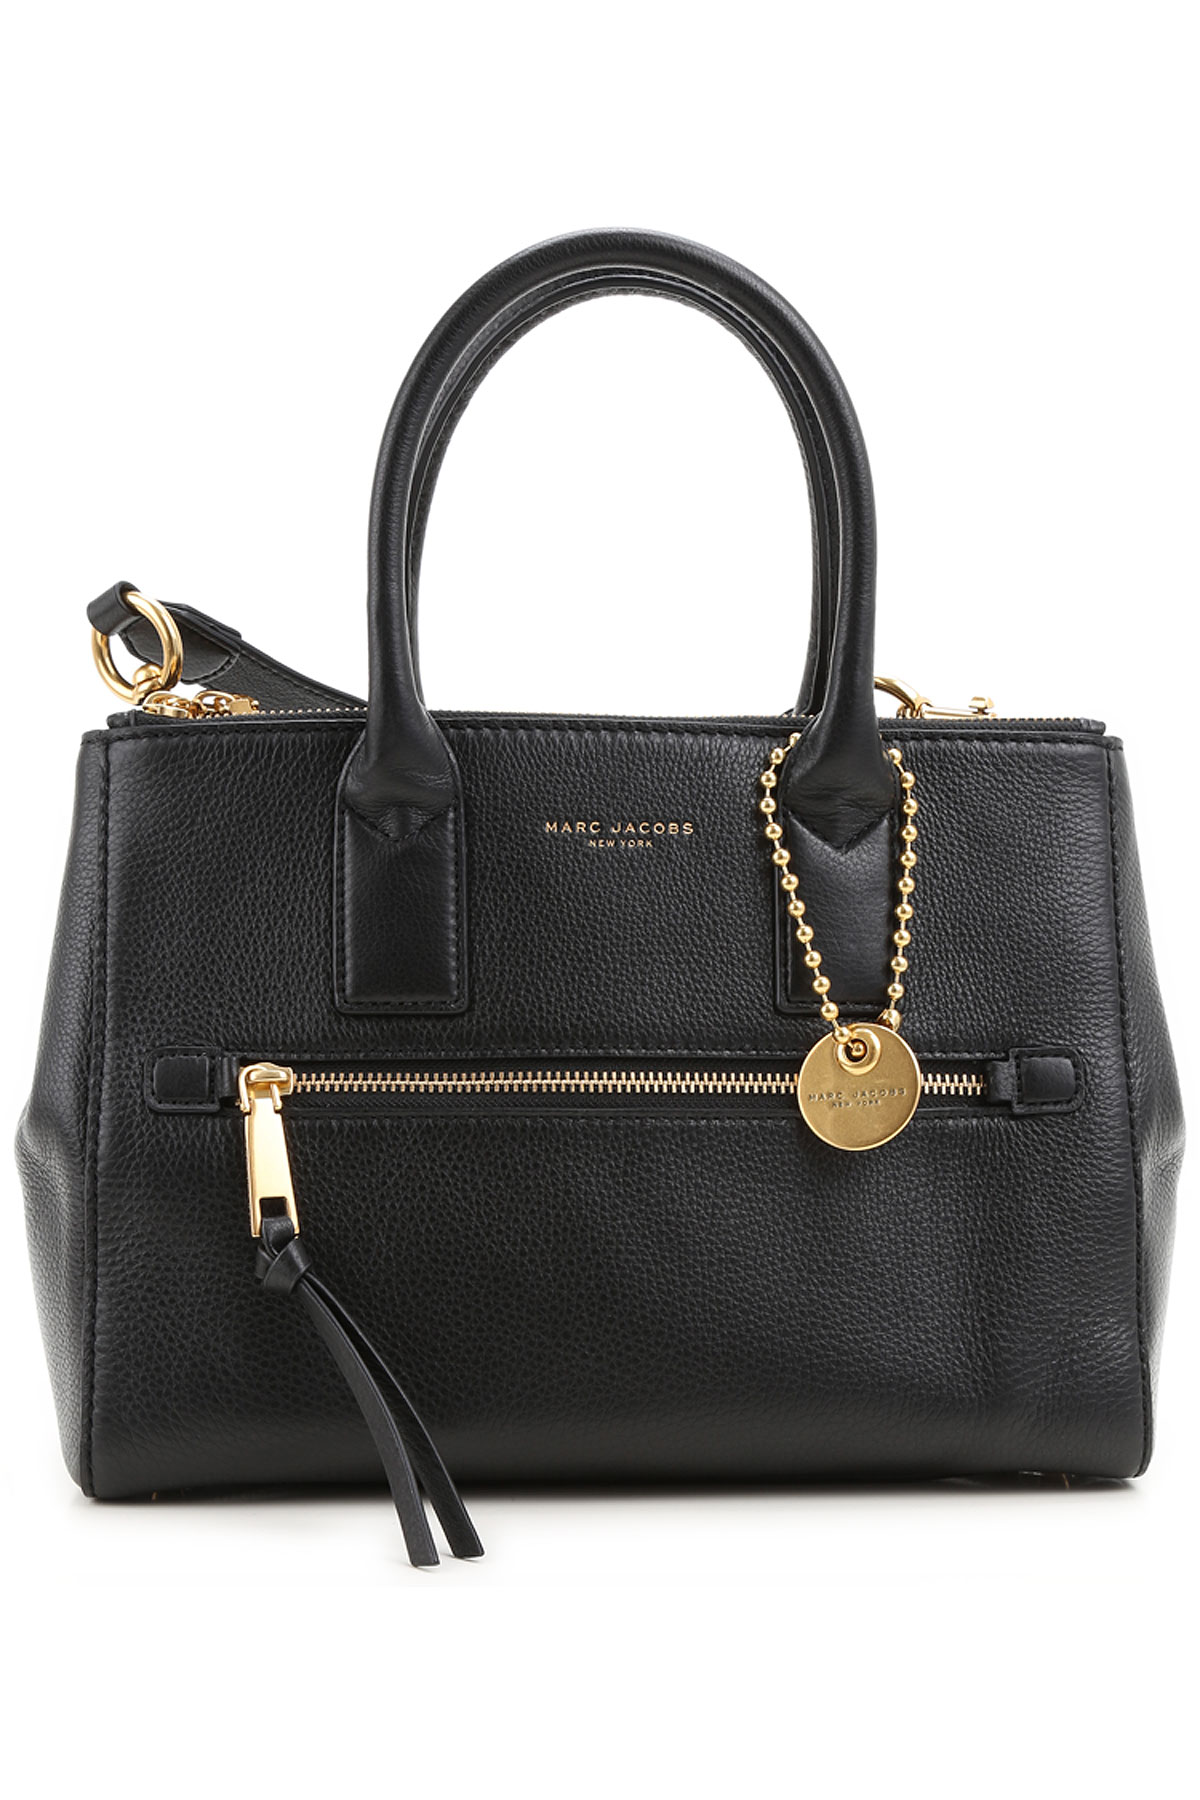 Handbags Marc Jacobs, Style code: m0008899-001-ner